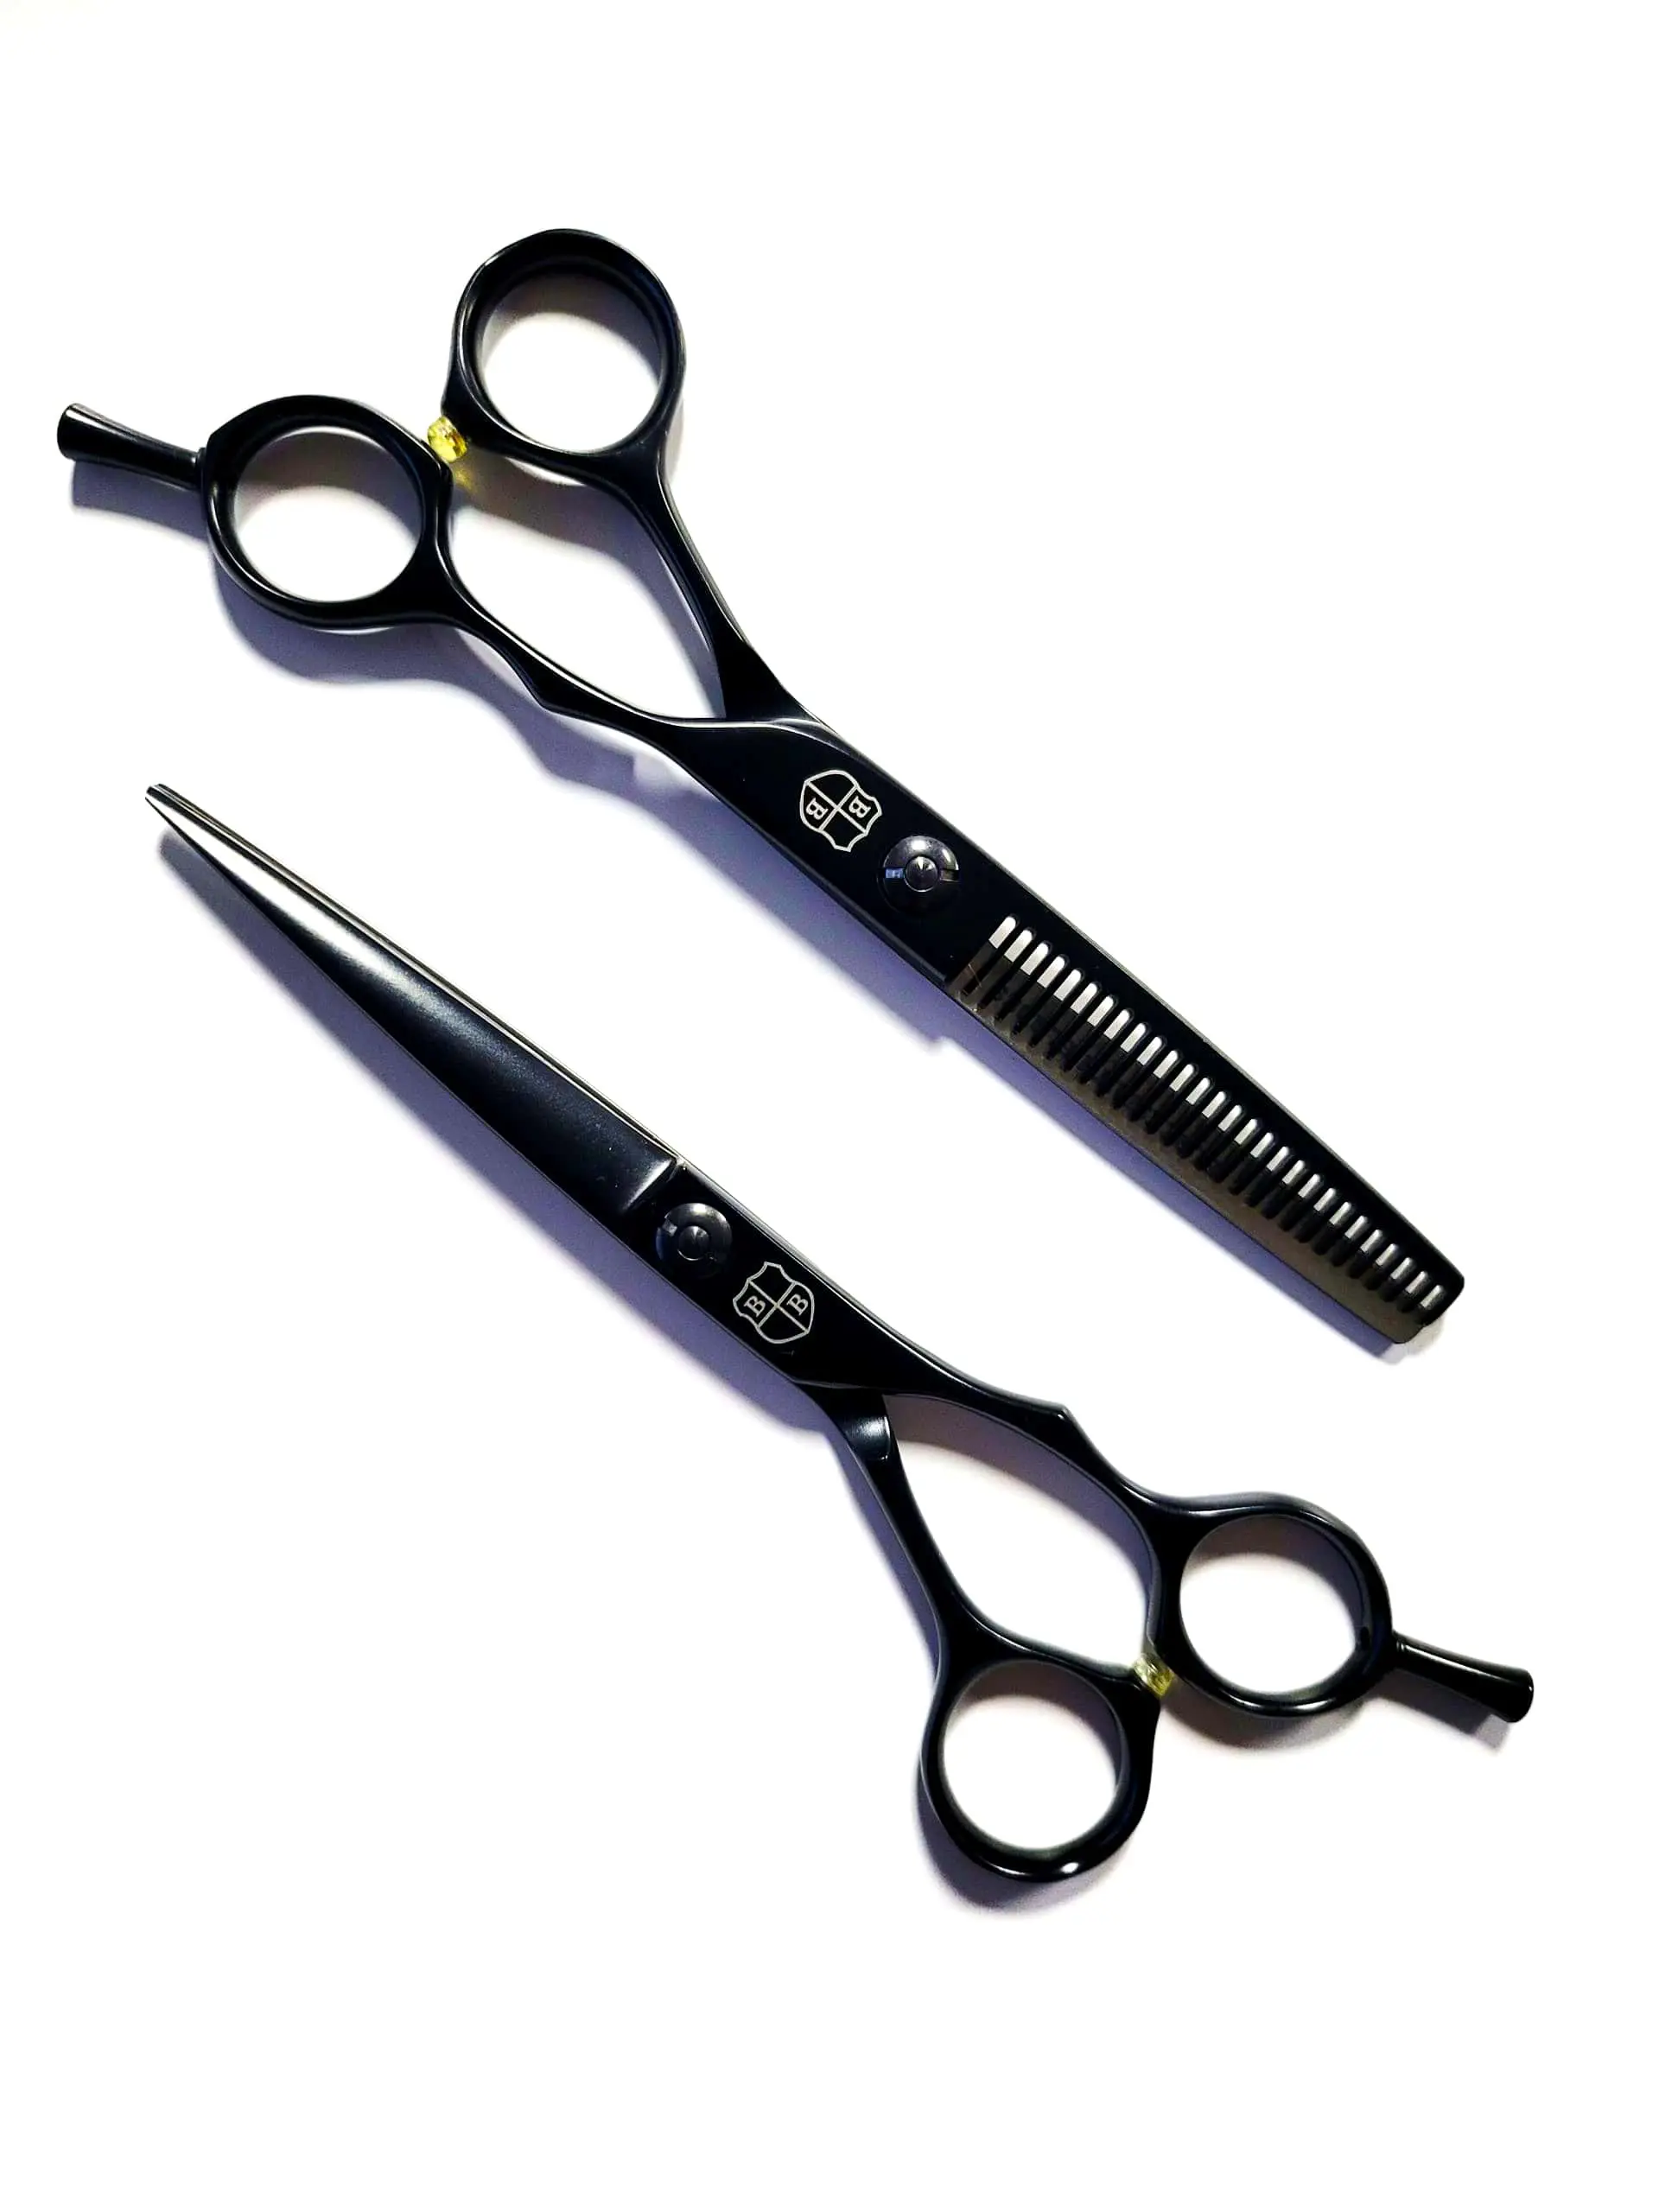 Blacksmith Blades hair cutting set. Hair cutting shears and thinning shears. Matte black color.